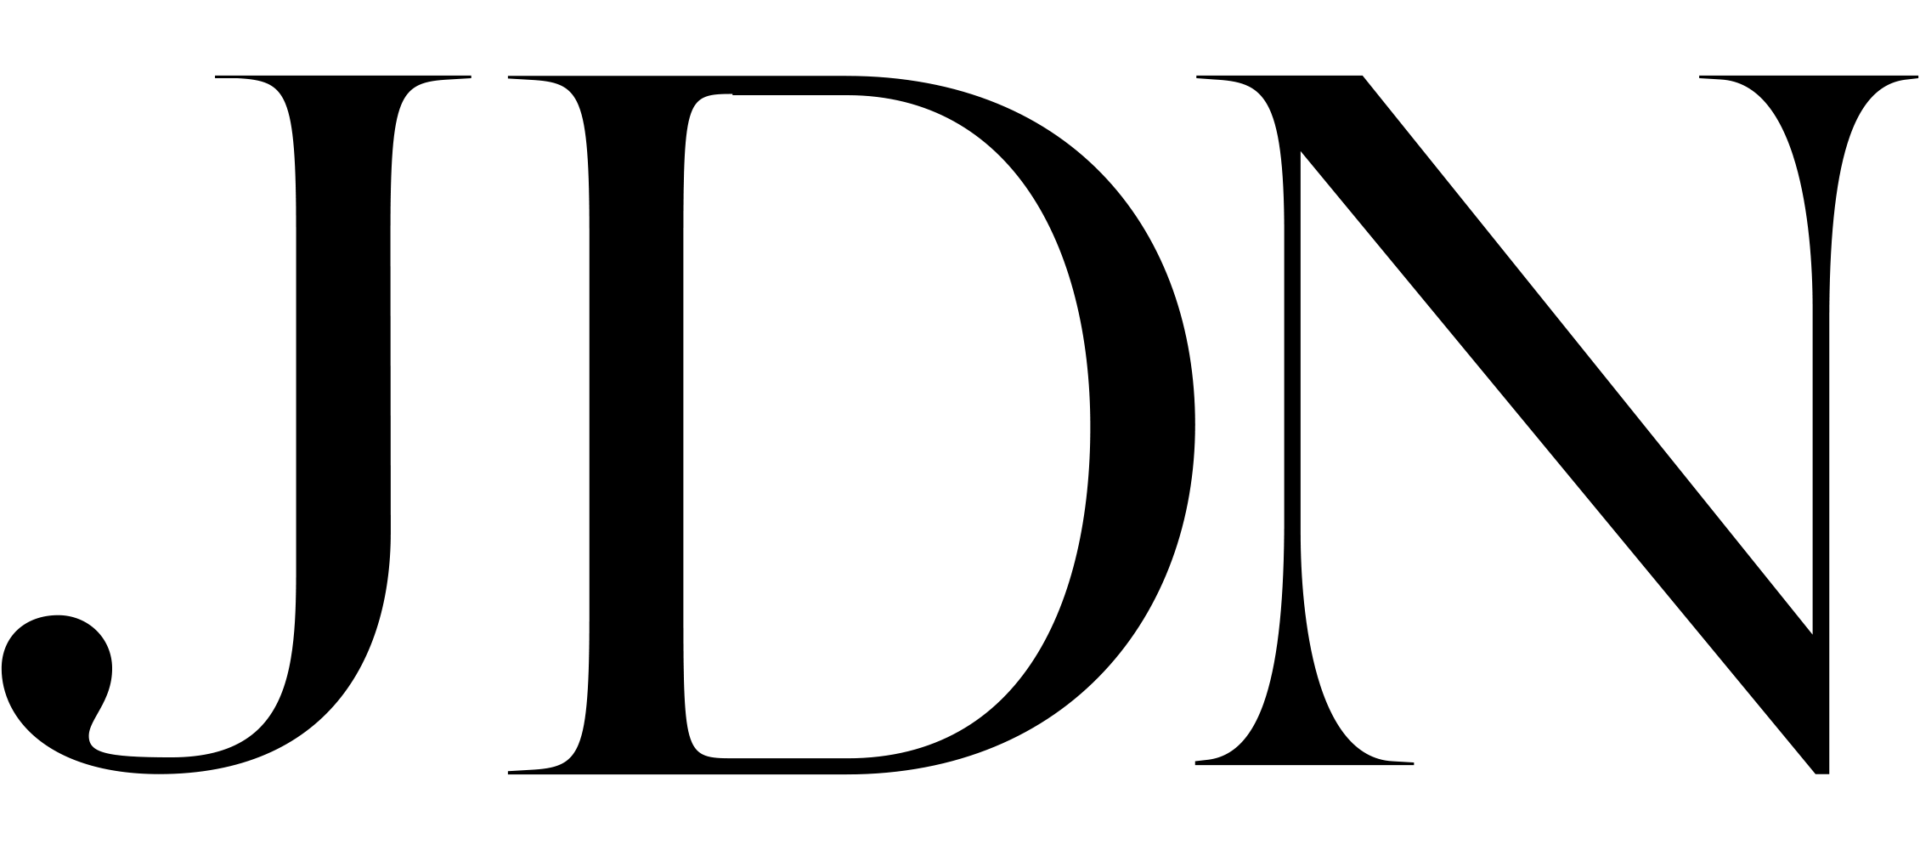 Xandr's logo